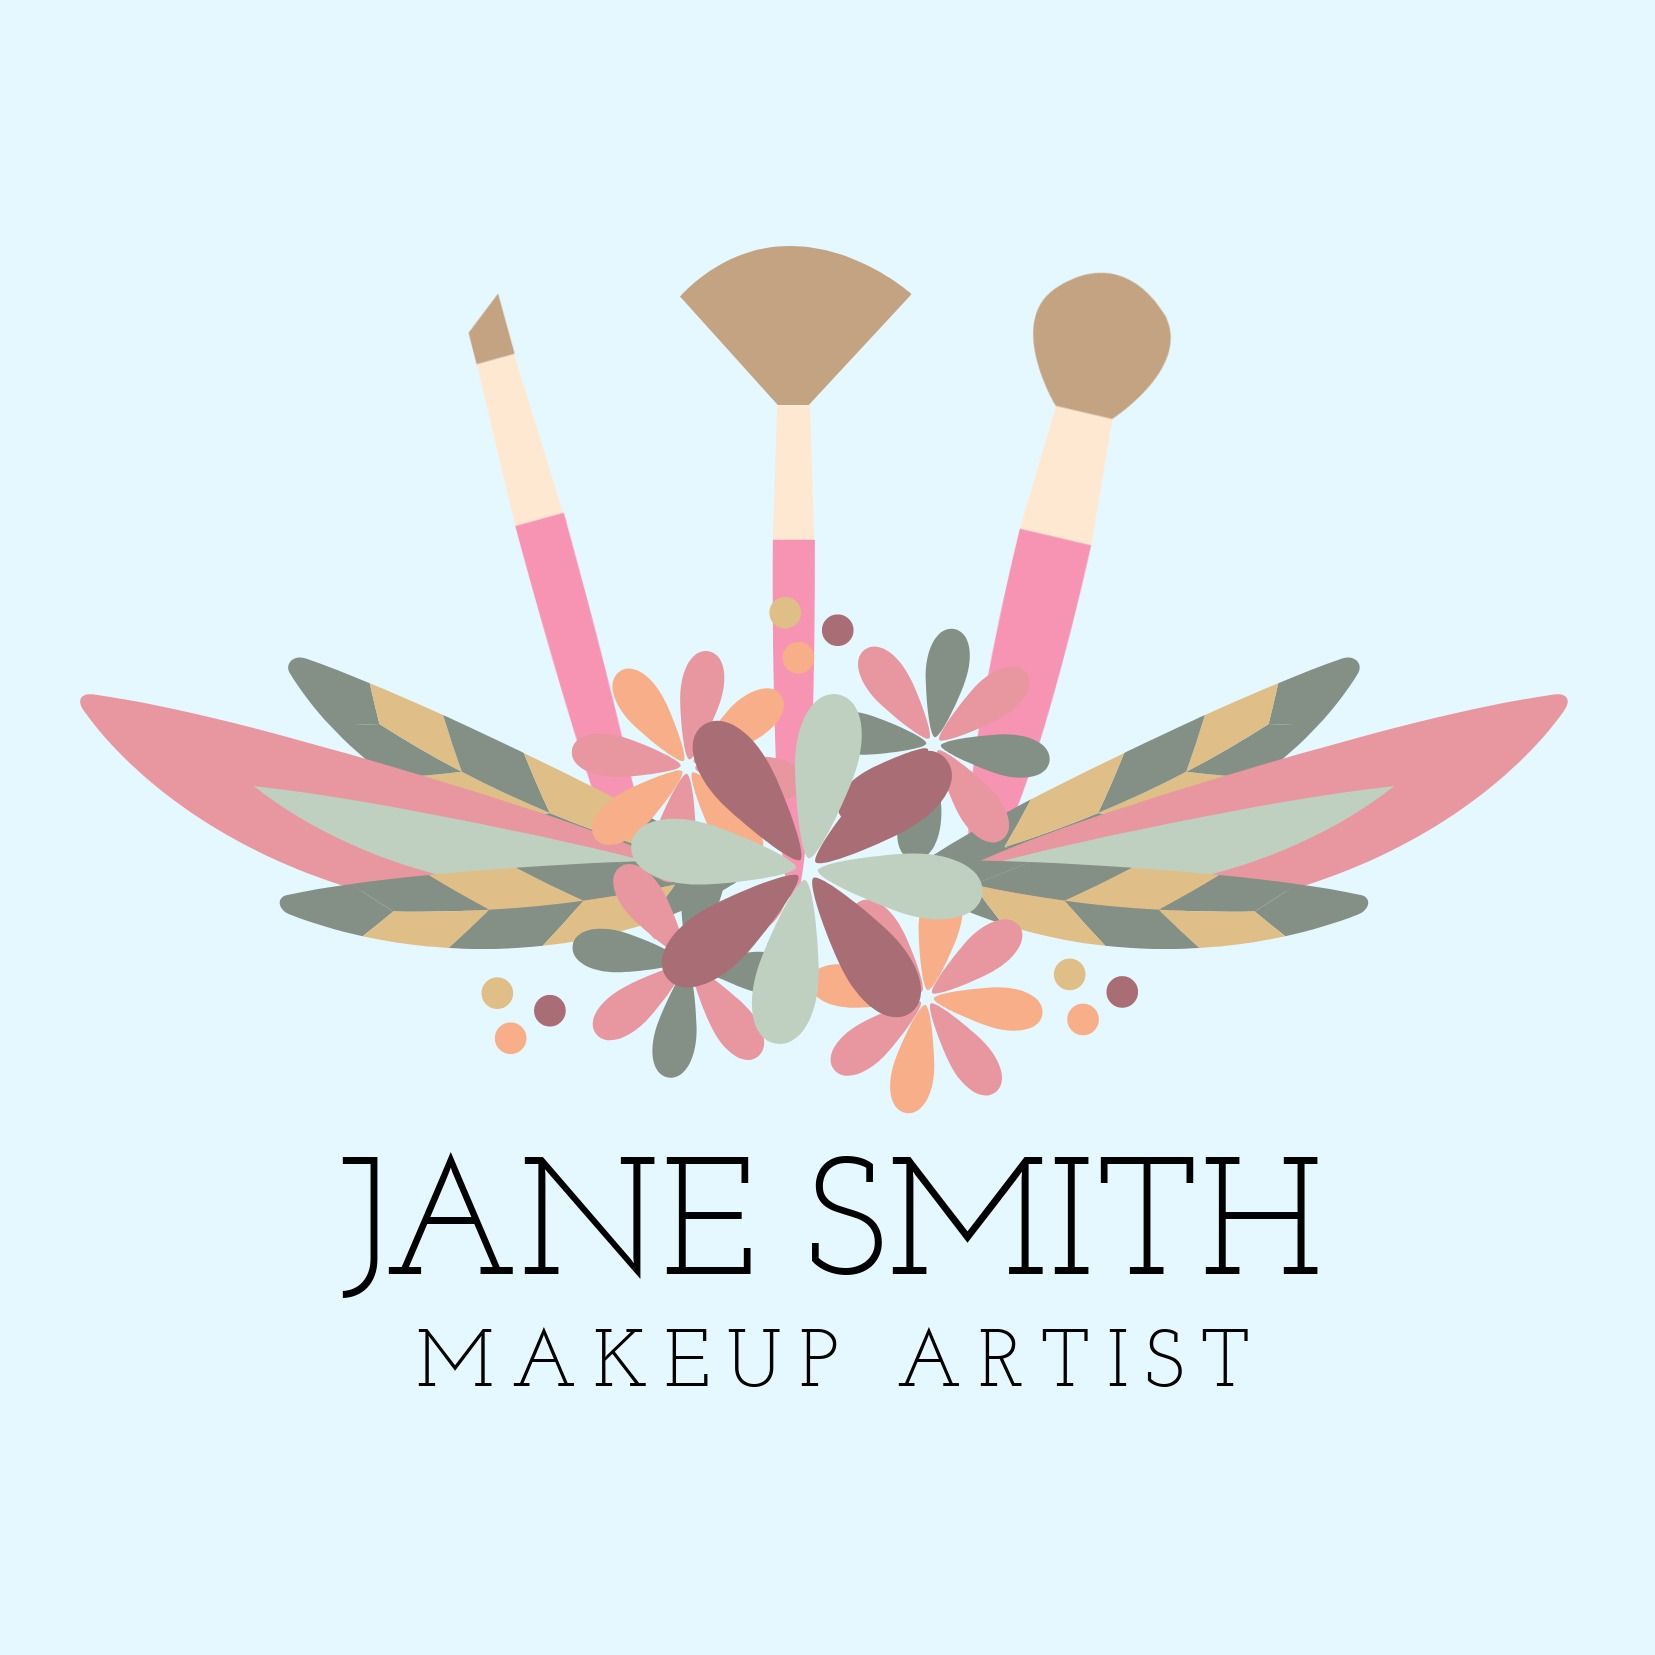 Logotipo da maquiadora Pastel Jane Smith e texto que o acompanha usando serifa plana